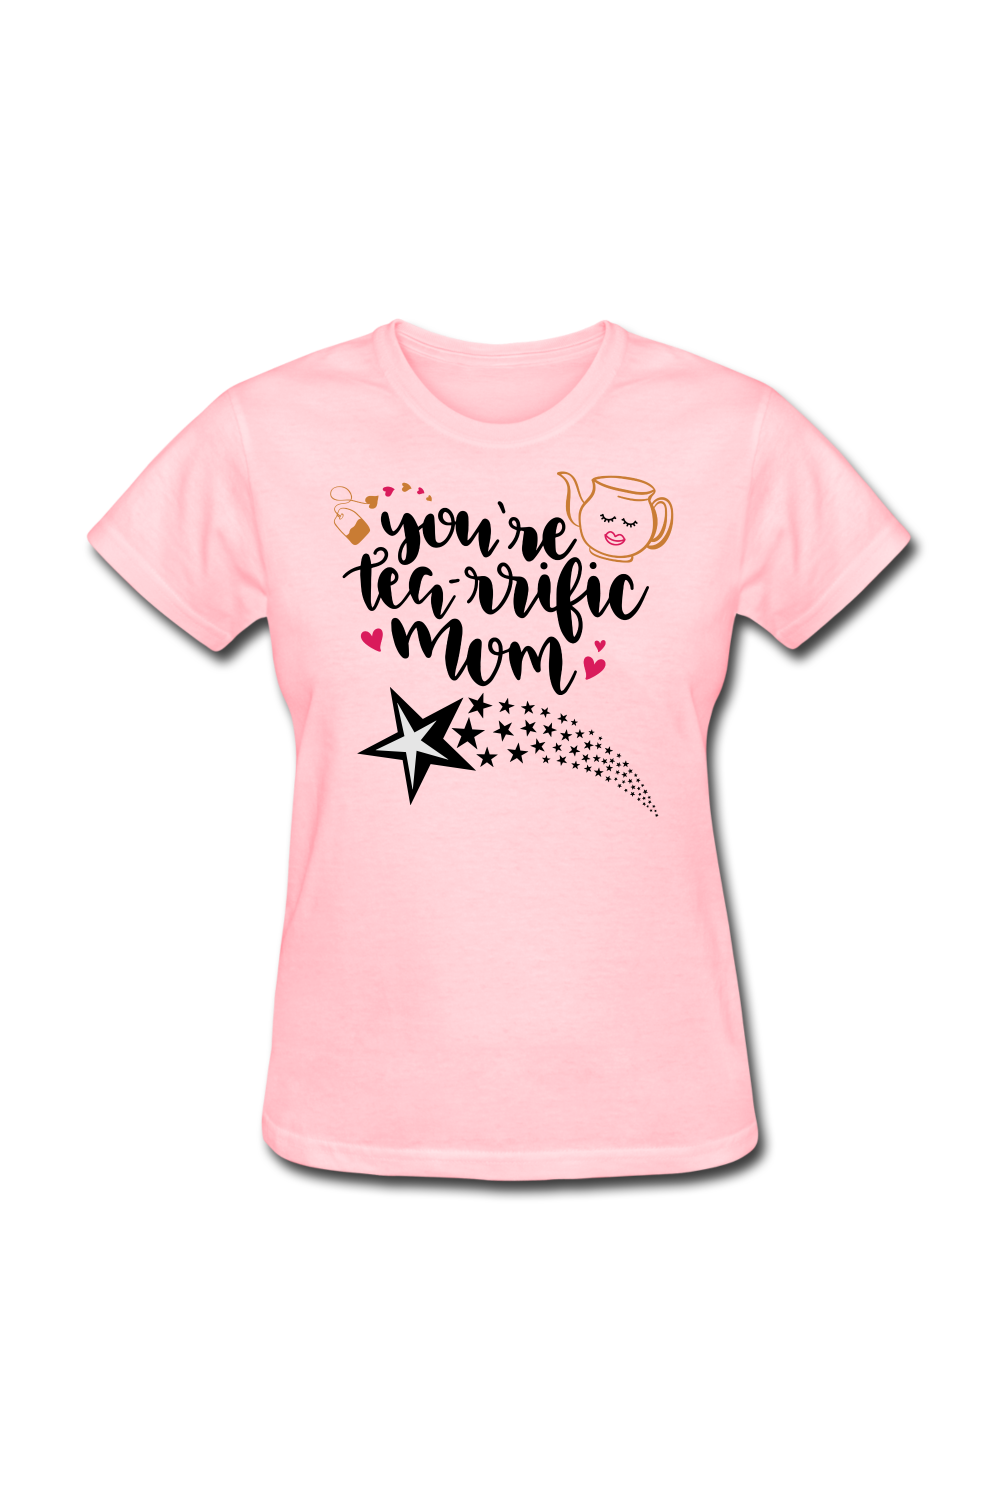 Women's Tea-rrific Mom T-Shirt - pink